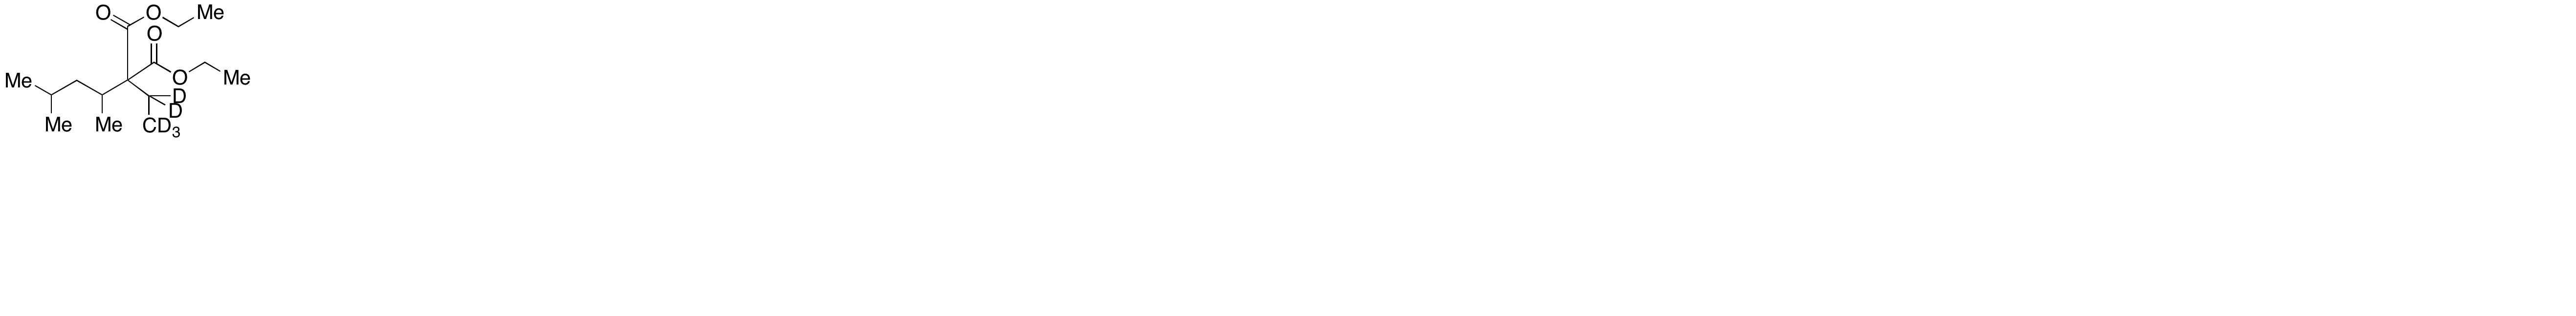 (1,3-Dimethylbutyl)ethylmalonic Acid-d5 Diethyl Ester